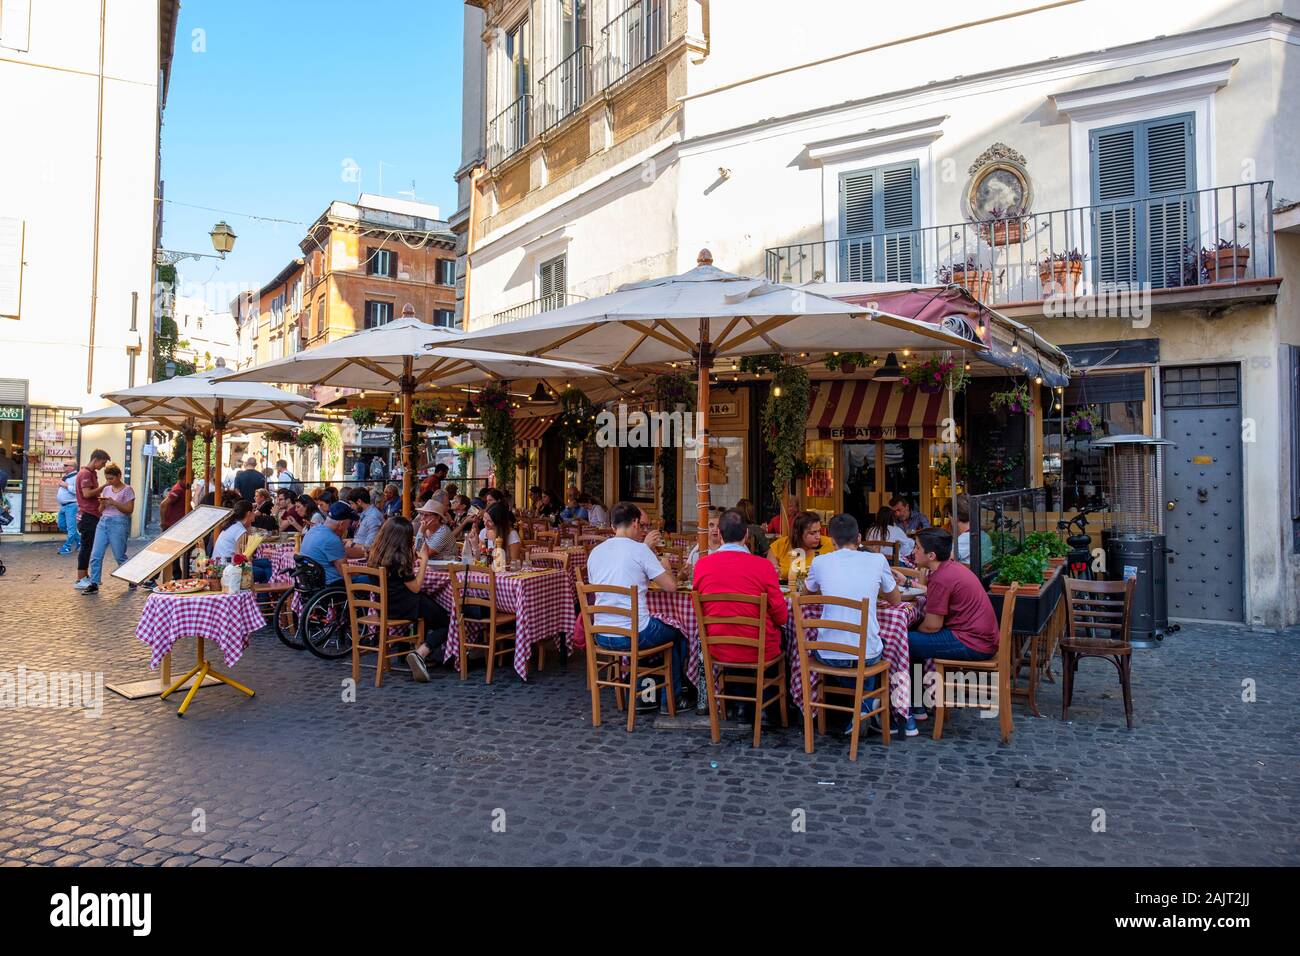 Tourists, alfresco dining, tourists eating outside Mercato Hostaria Roma Restaurant, Campo de' Fiori public market, Rome, Italy Stock Photo